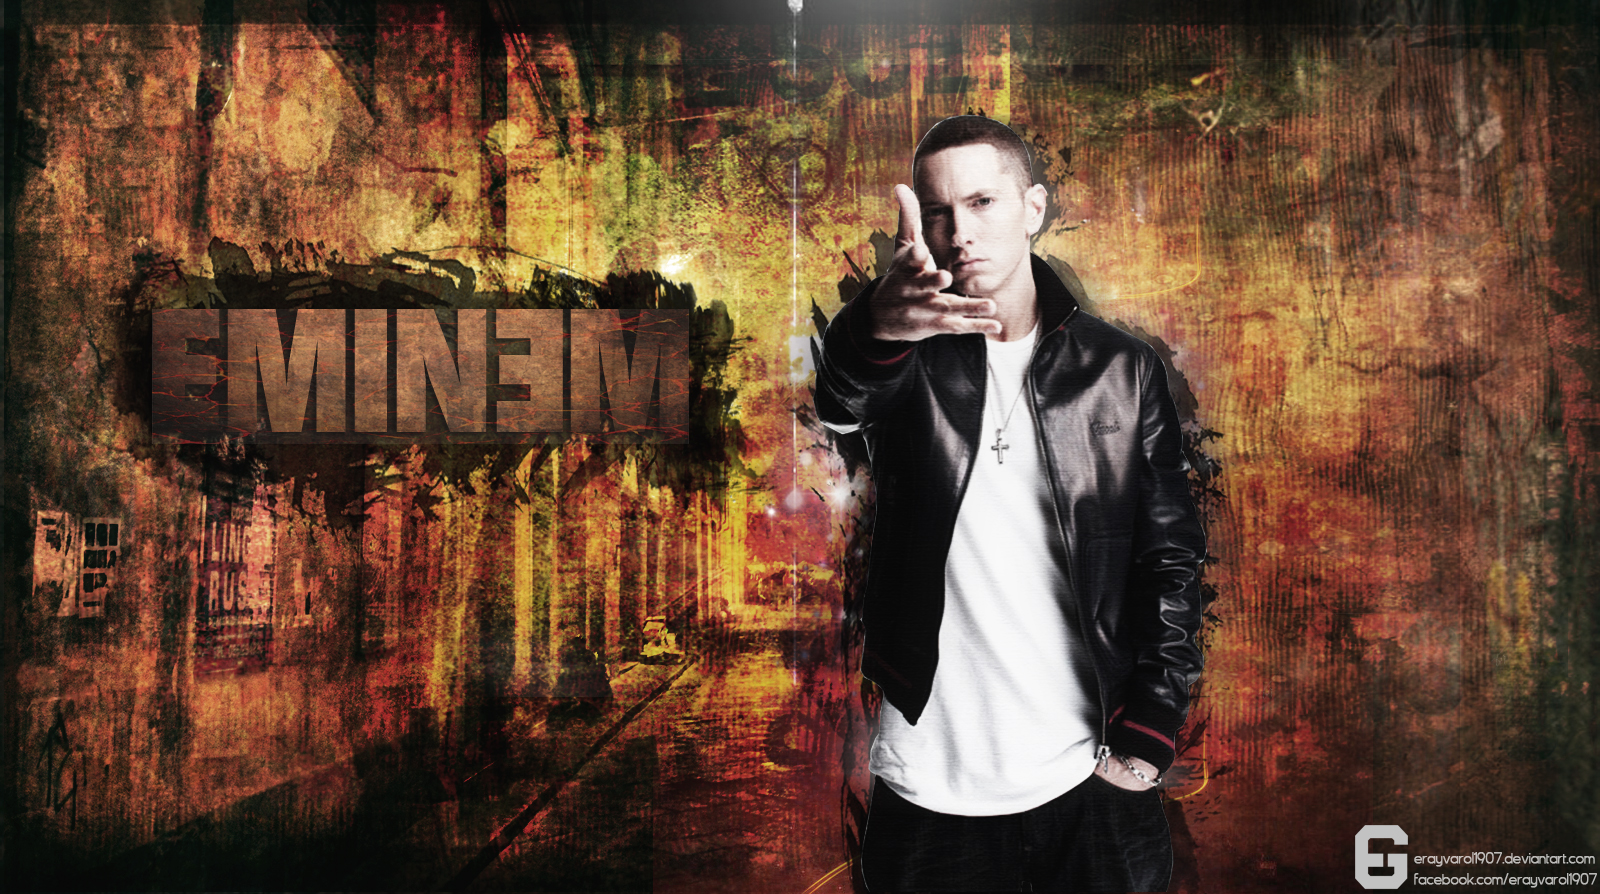 Eminem Wallpaper By Erayvarol1907